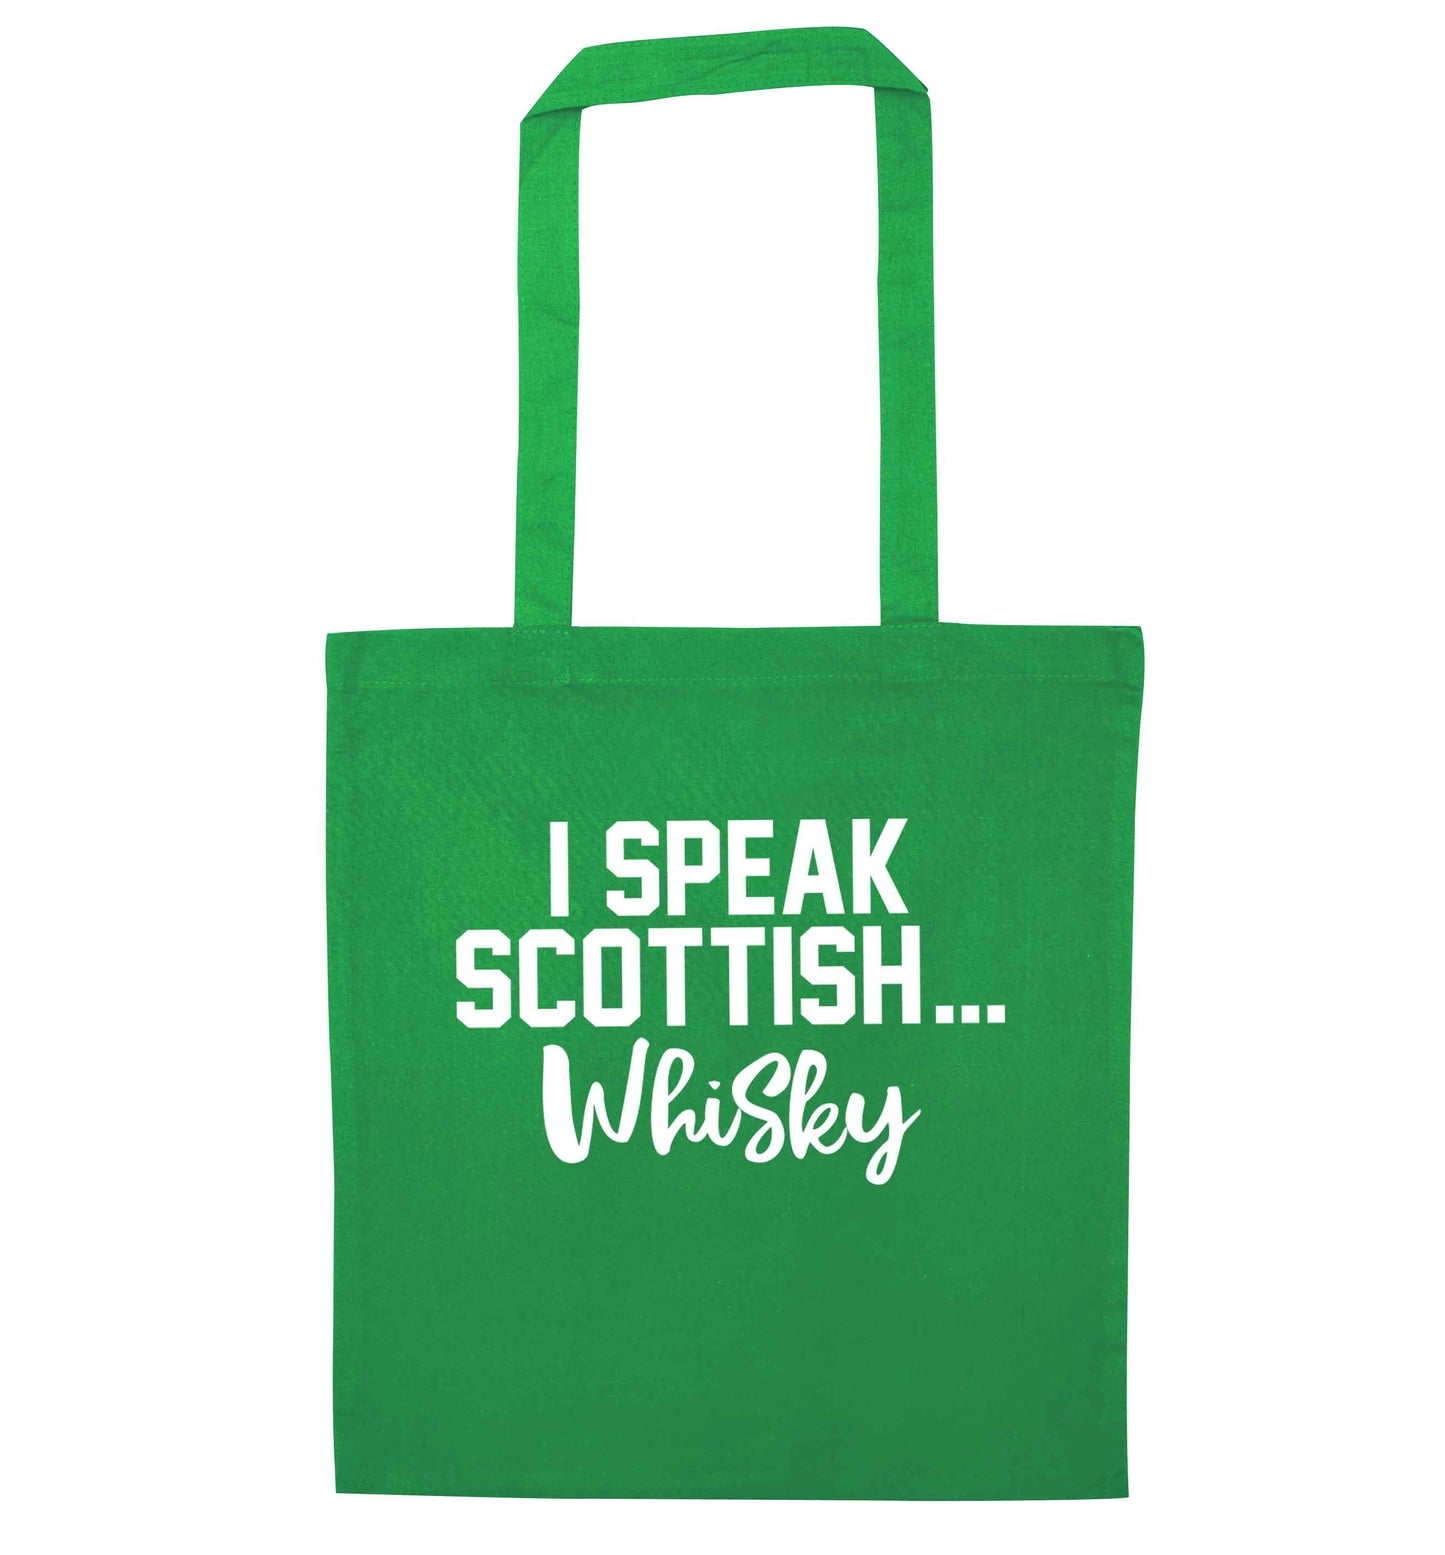 I speak scottish...whisky green tote bag